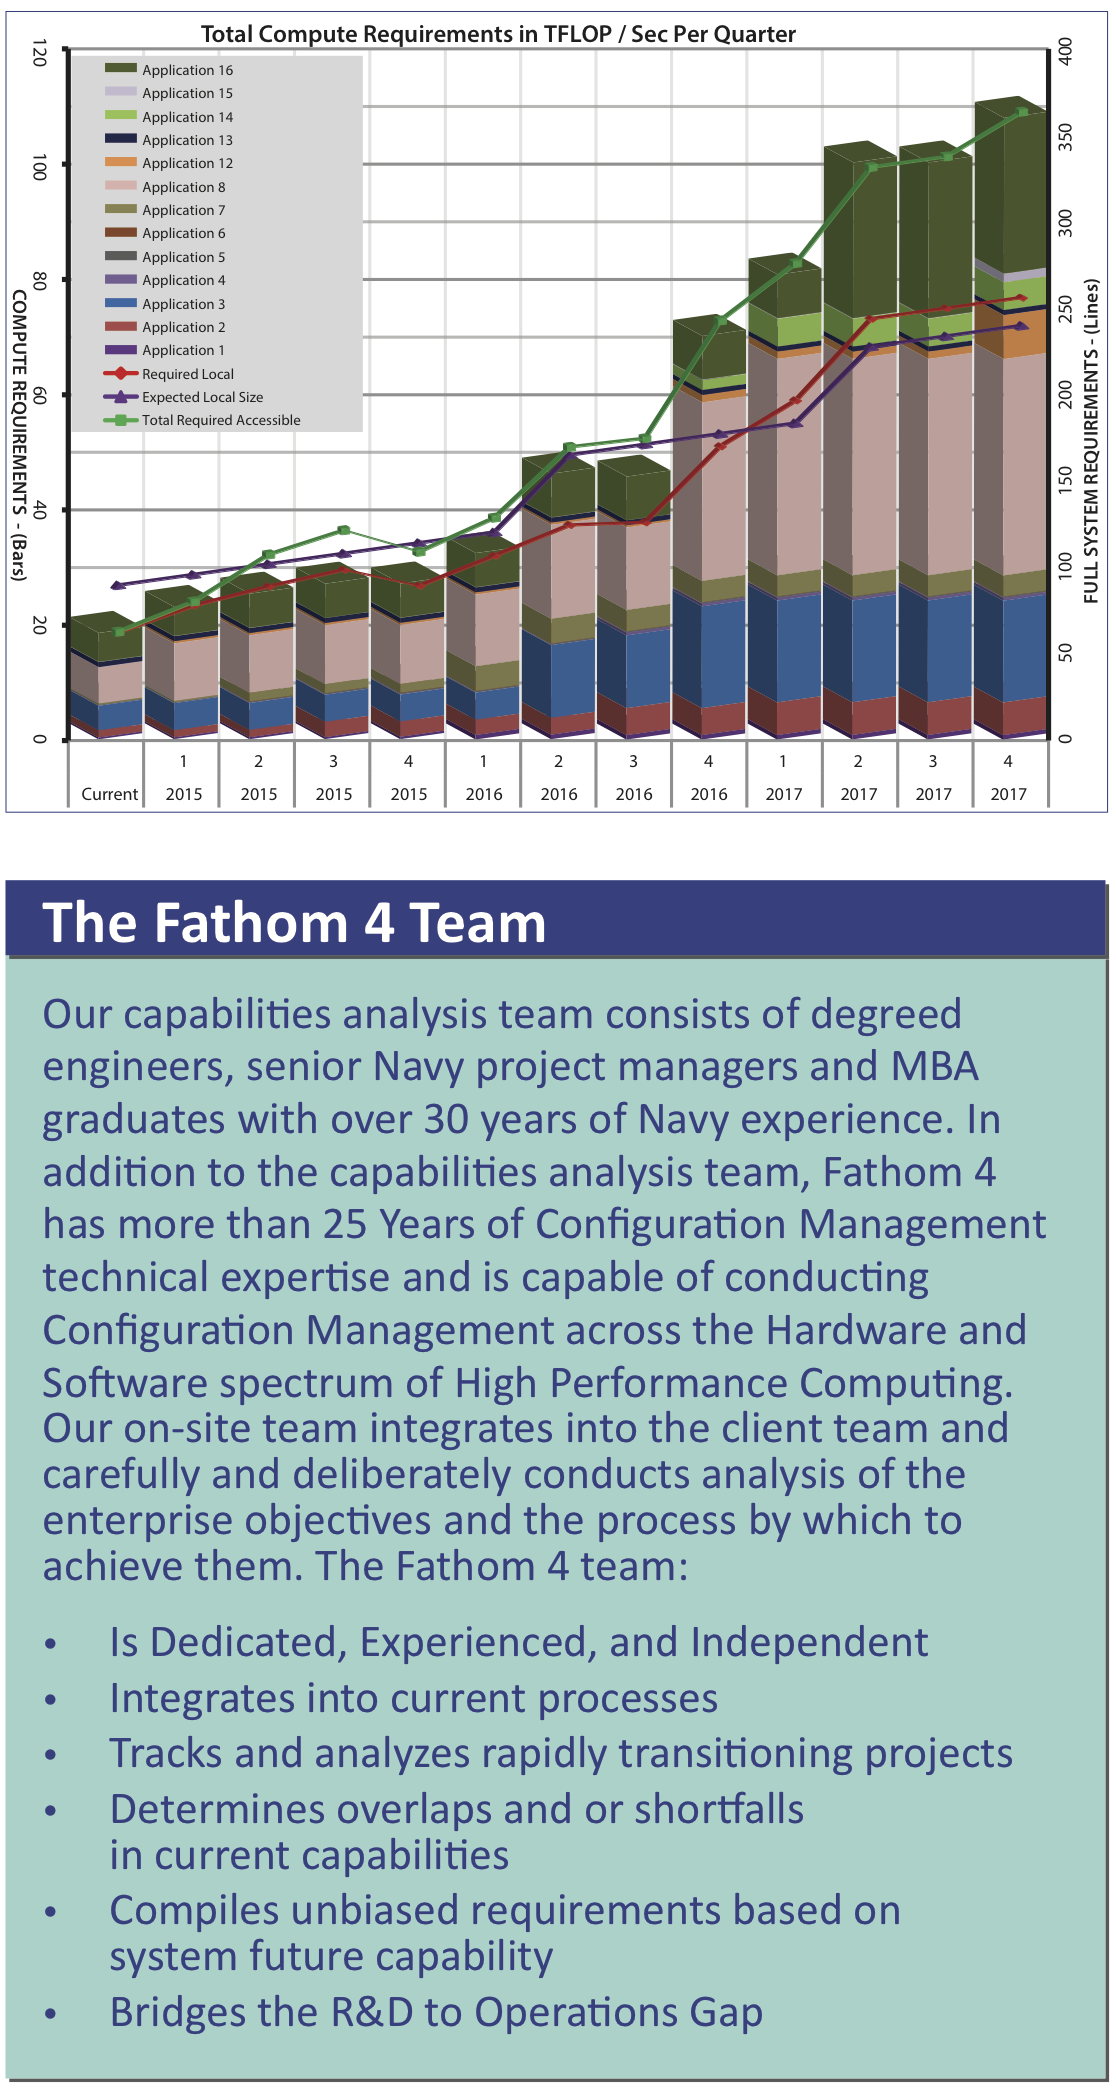 High Performance Computing Systems Analysis